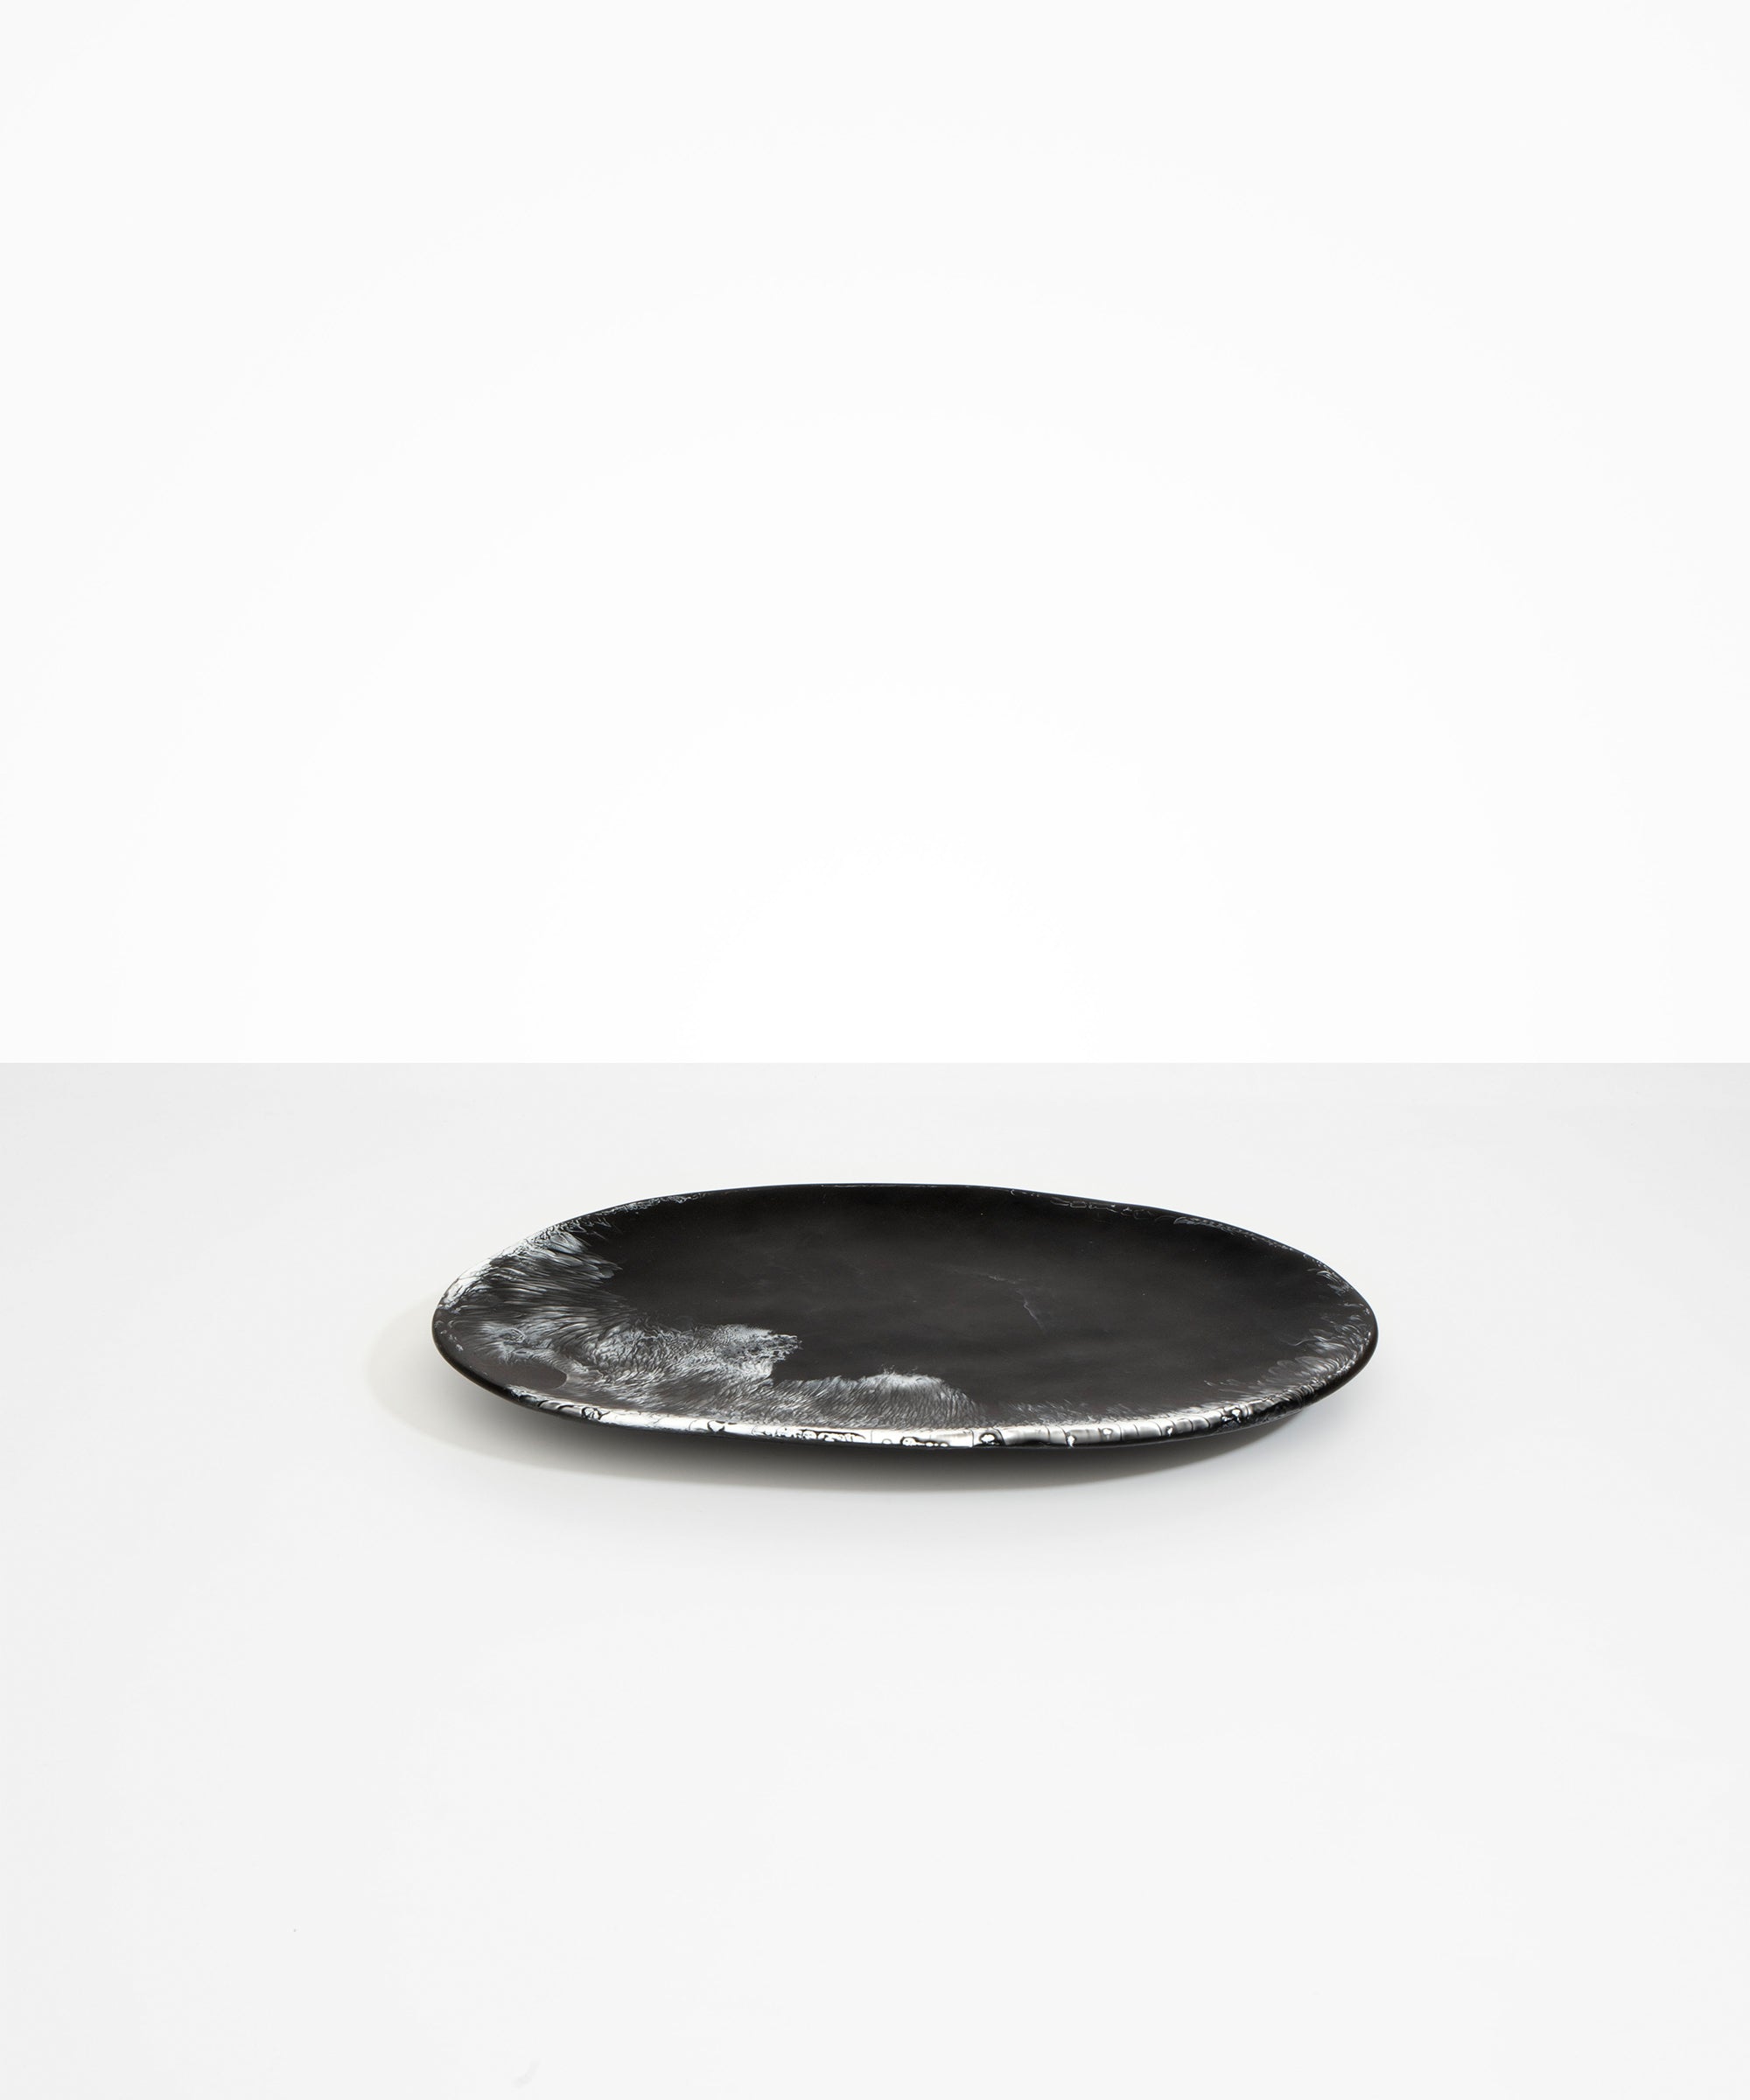 Dinosaur Designs Large Temple Platter Serving Platters in Black Marble color resin